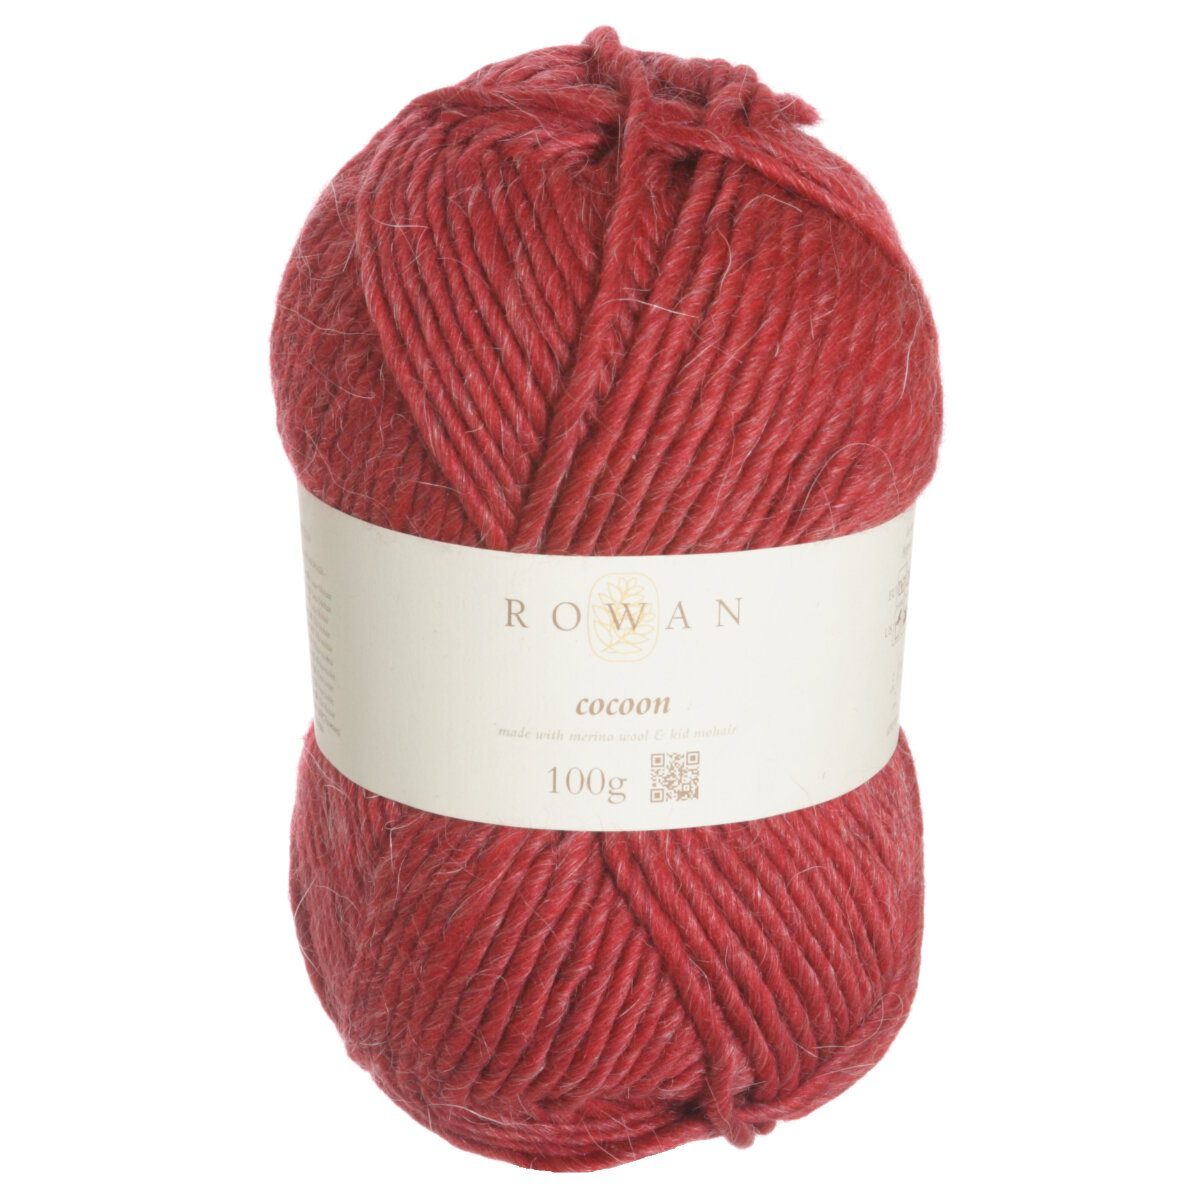 Rowan Cocoon Yarn at Jimmy Beans Wool